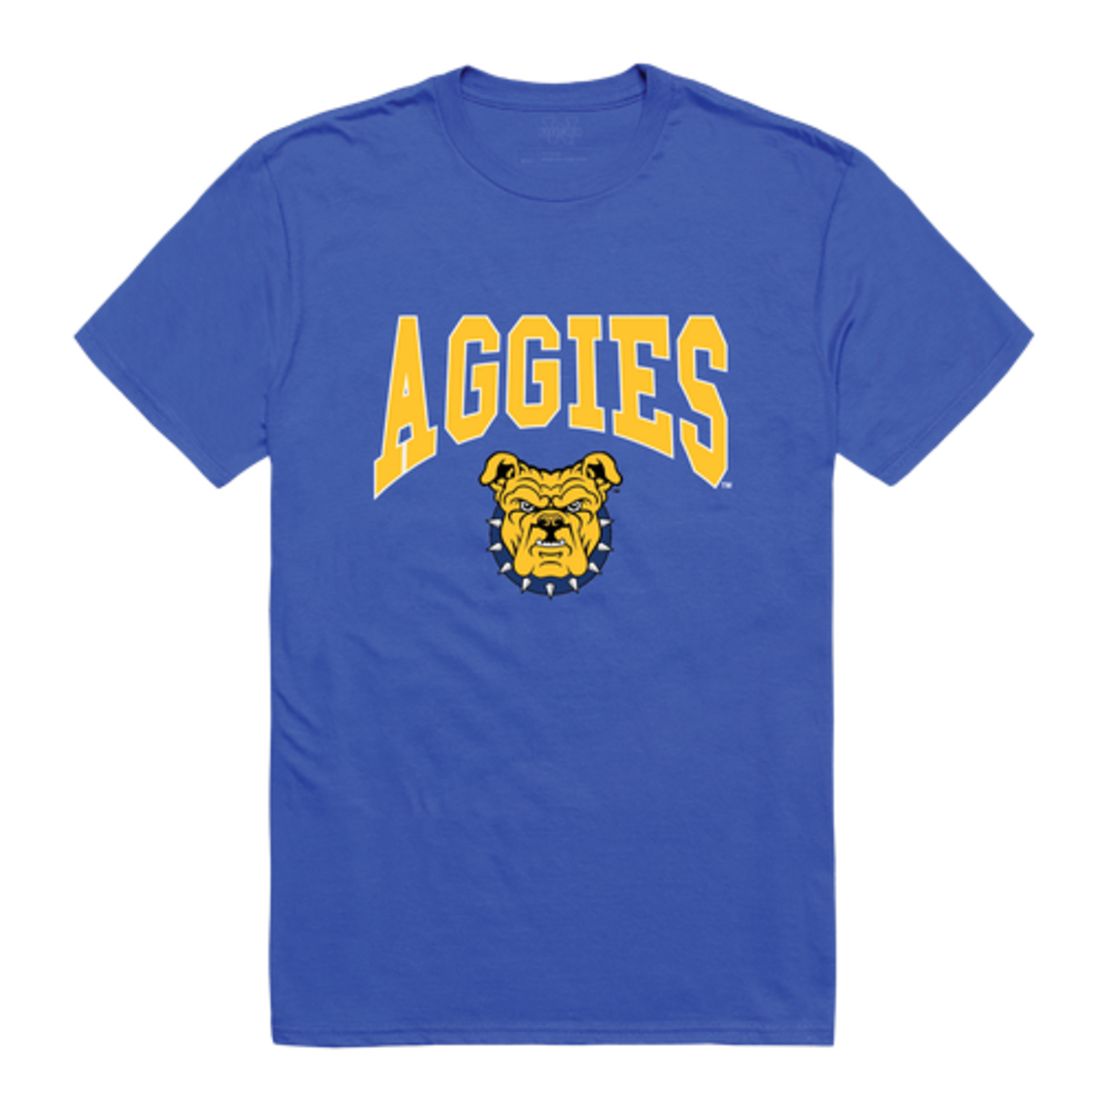 North Carolina A&T State University Aggies Athletic T-Shirt Tee